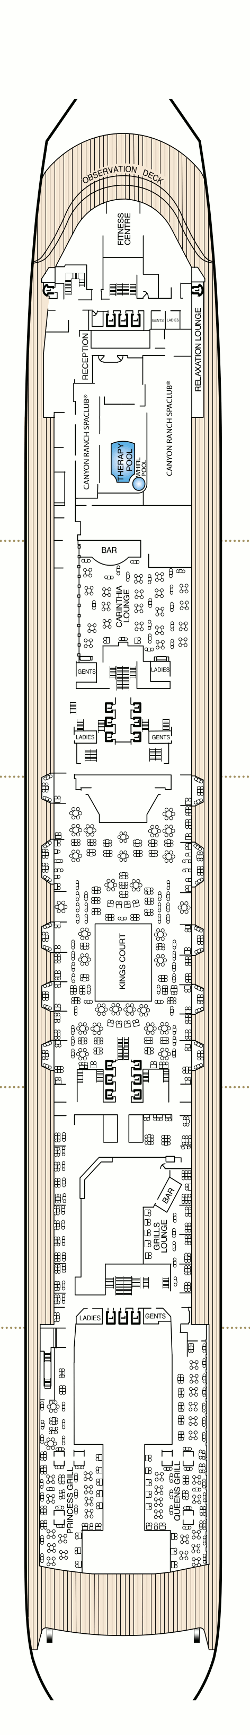 Queen Mary 2 Deck Seven Deck Plan